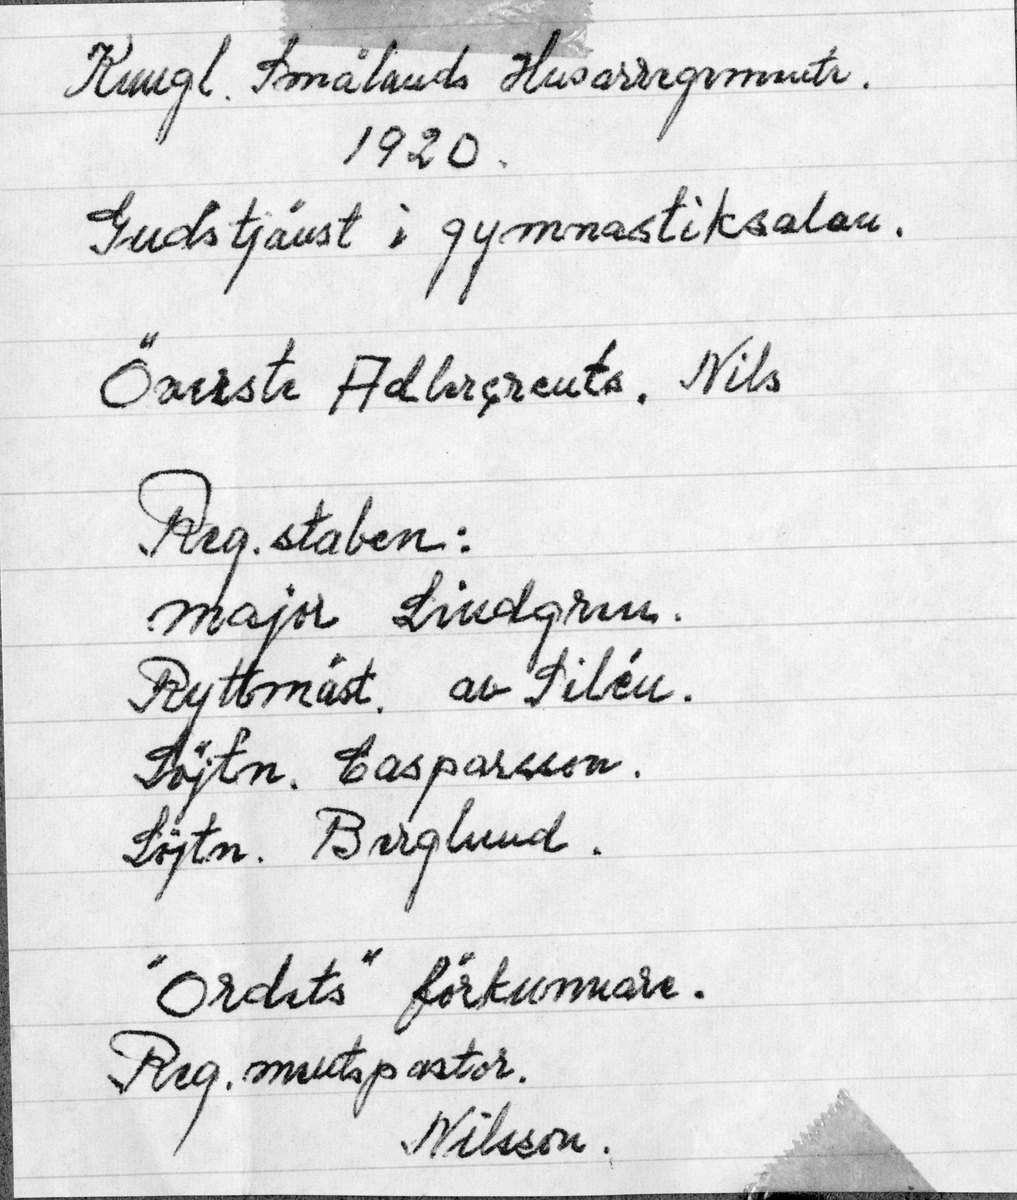 Smålands husarregemente K 4 håller gudstjänst i gymnastiksalen 1920. Bå bilden syns bland andra överste Nils Adlercreutz, major Lindgren, ryttmästare af Silén, löjtnant Casparsson, löjtnant Berglund, regementspastorn Nilsson.